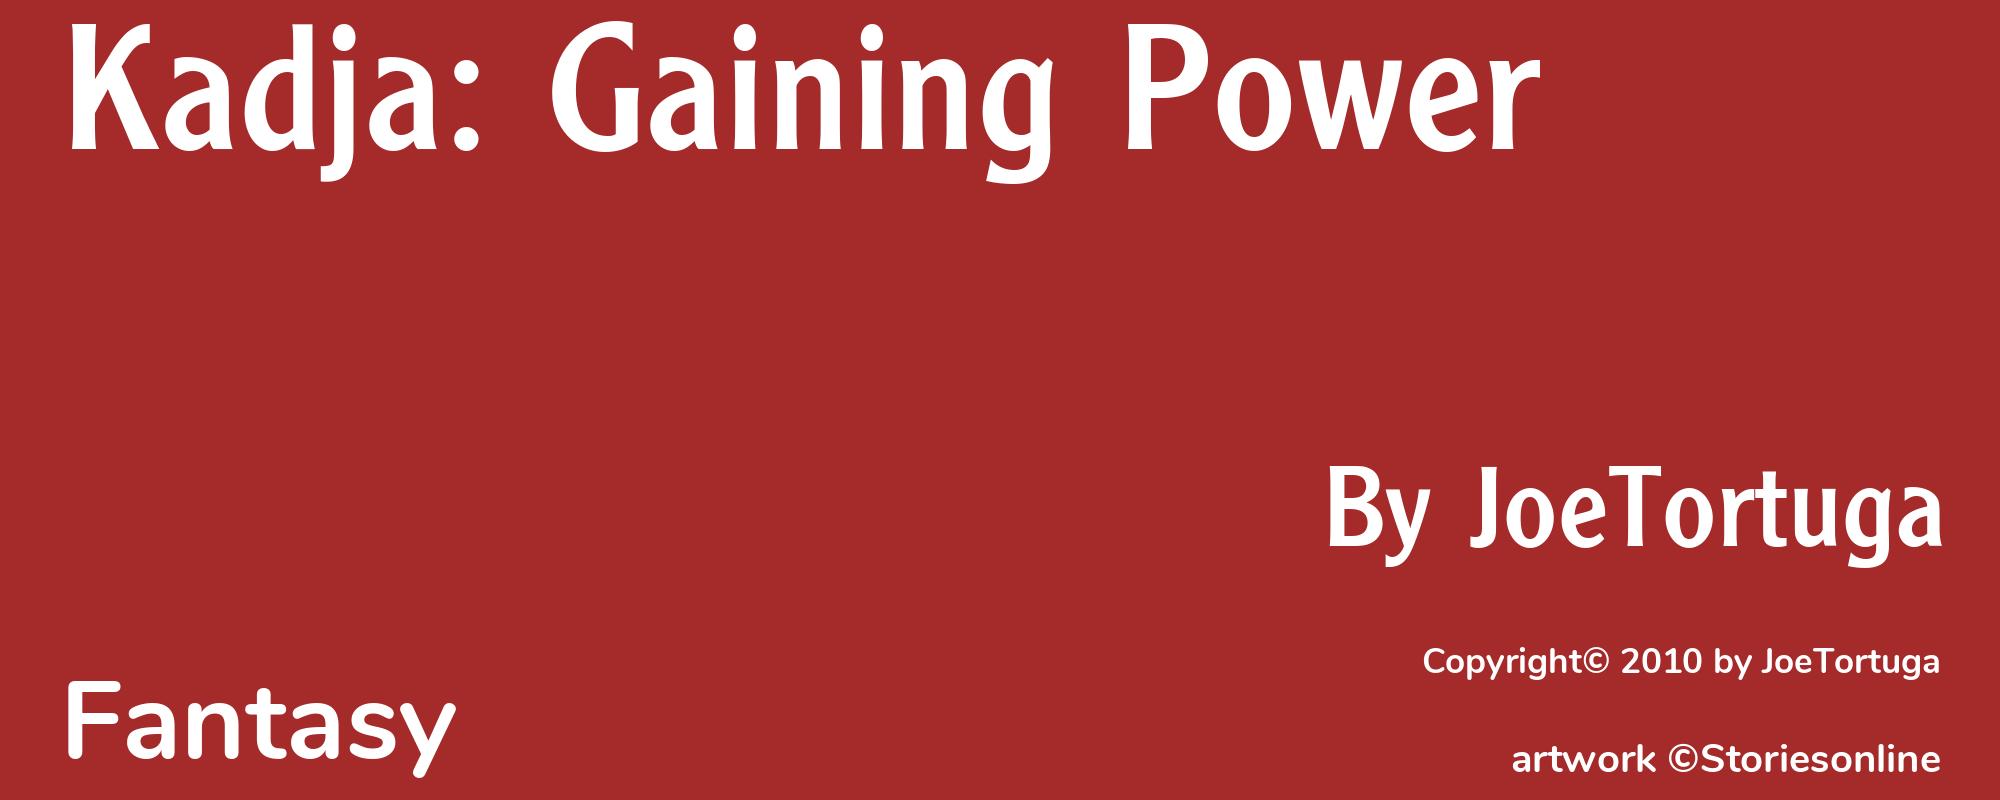 Kadja: Gaining Power - Cover